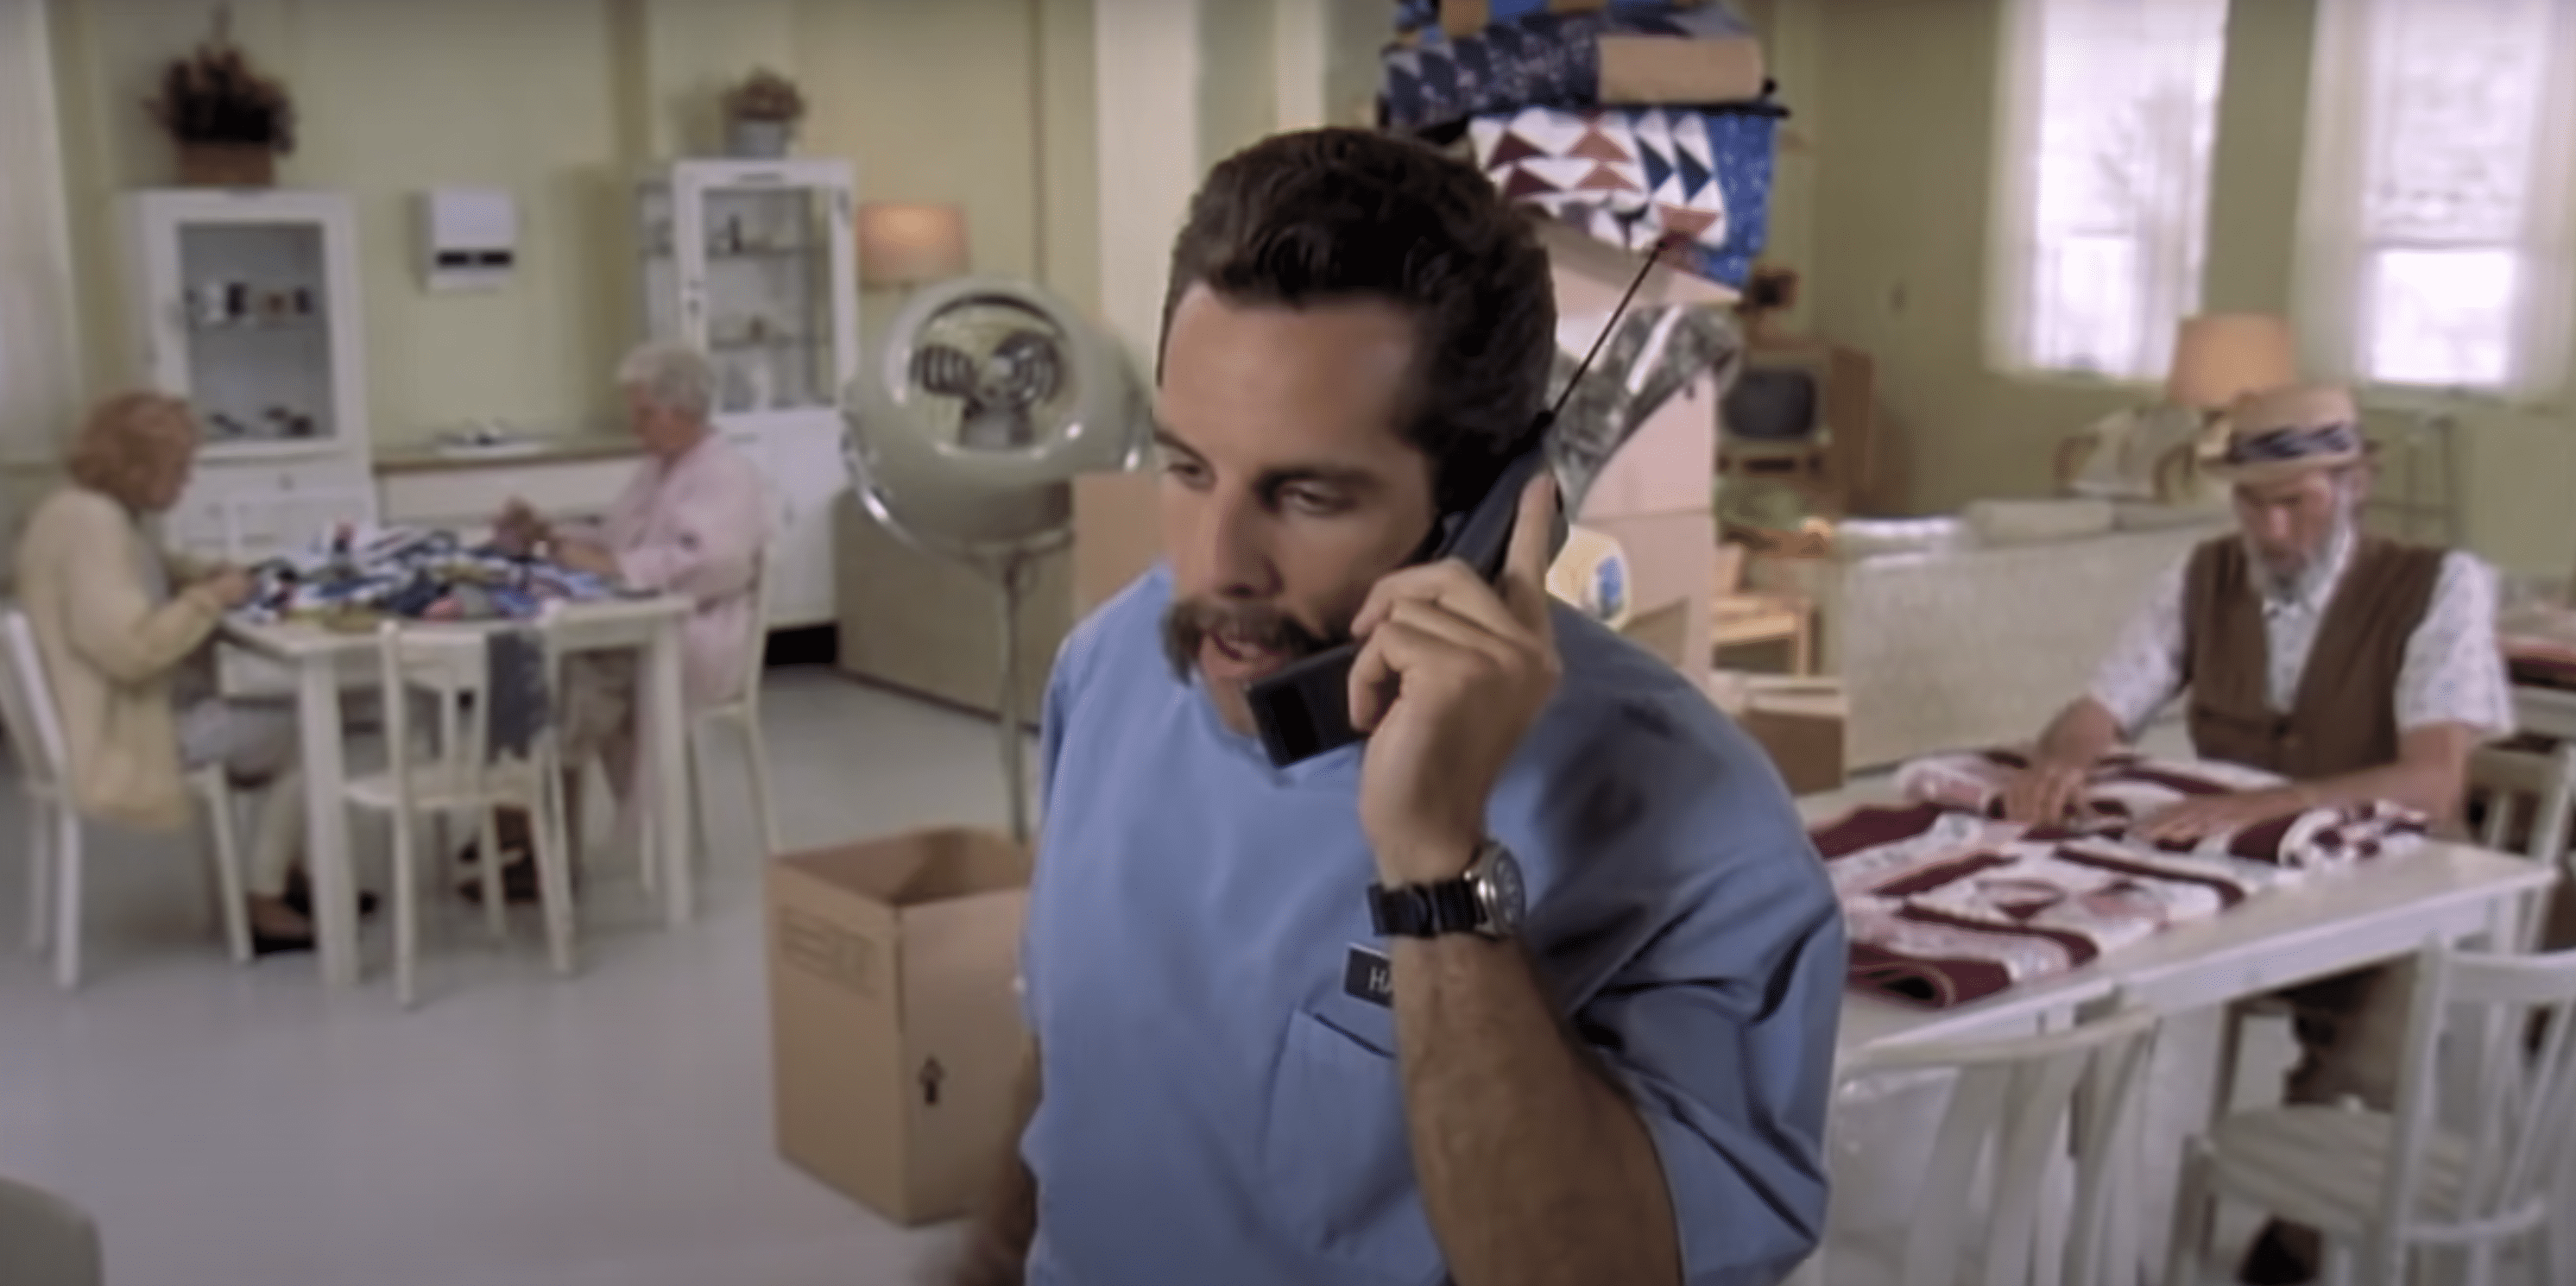 Ben Stiller as Hal L. in "Happy Gilmore," circa 1996. | Source: Youtube/Movieclips